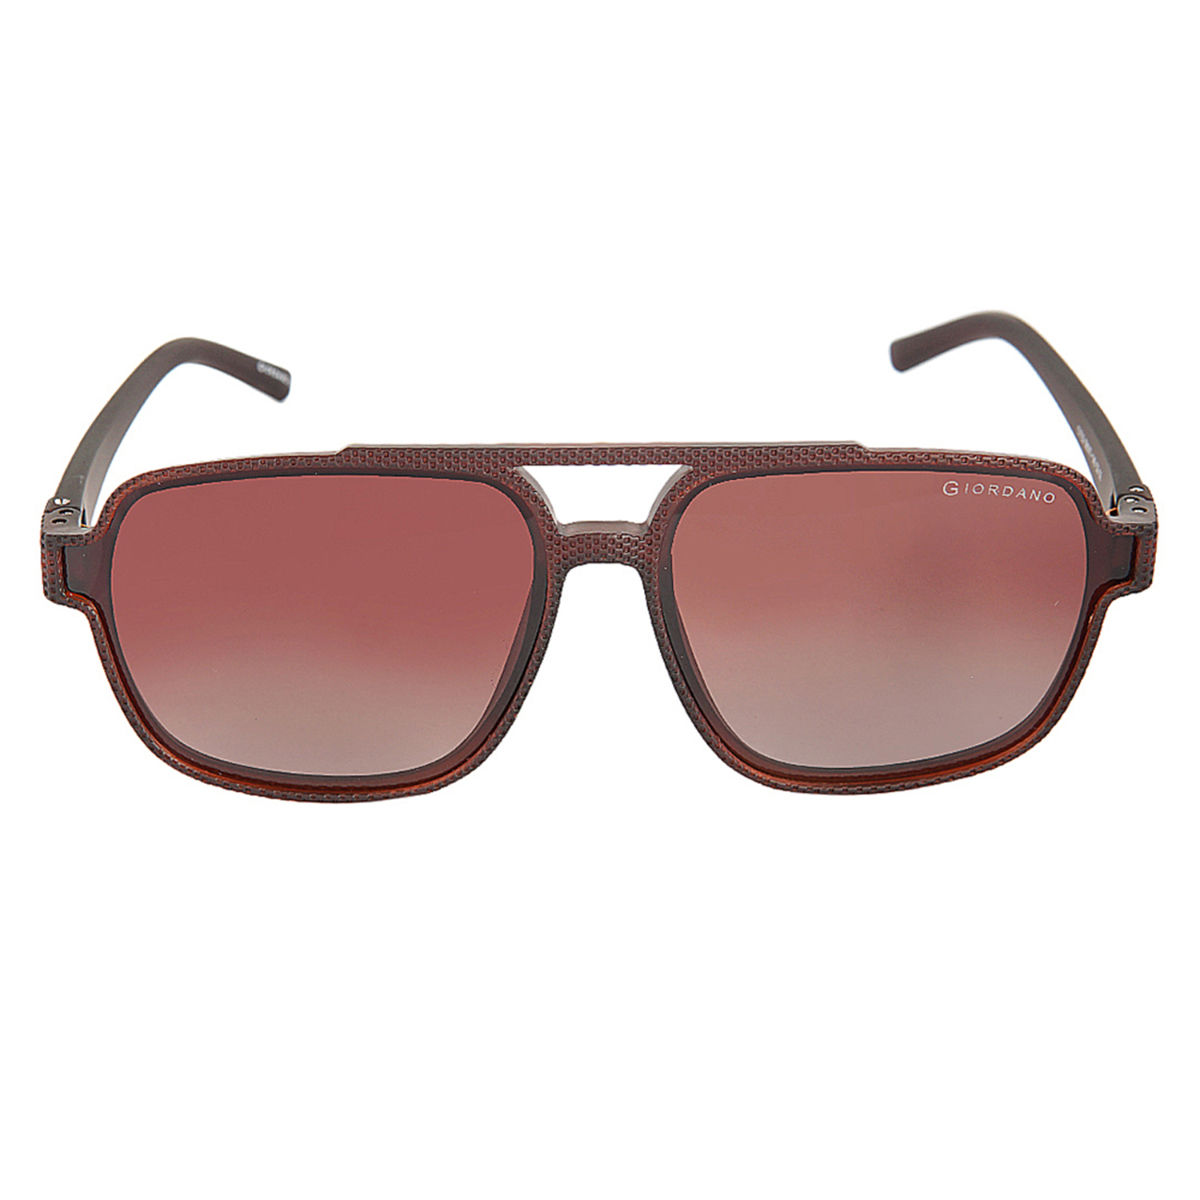 Giordano Grey Square Unisex Sunglasses